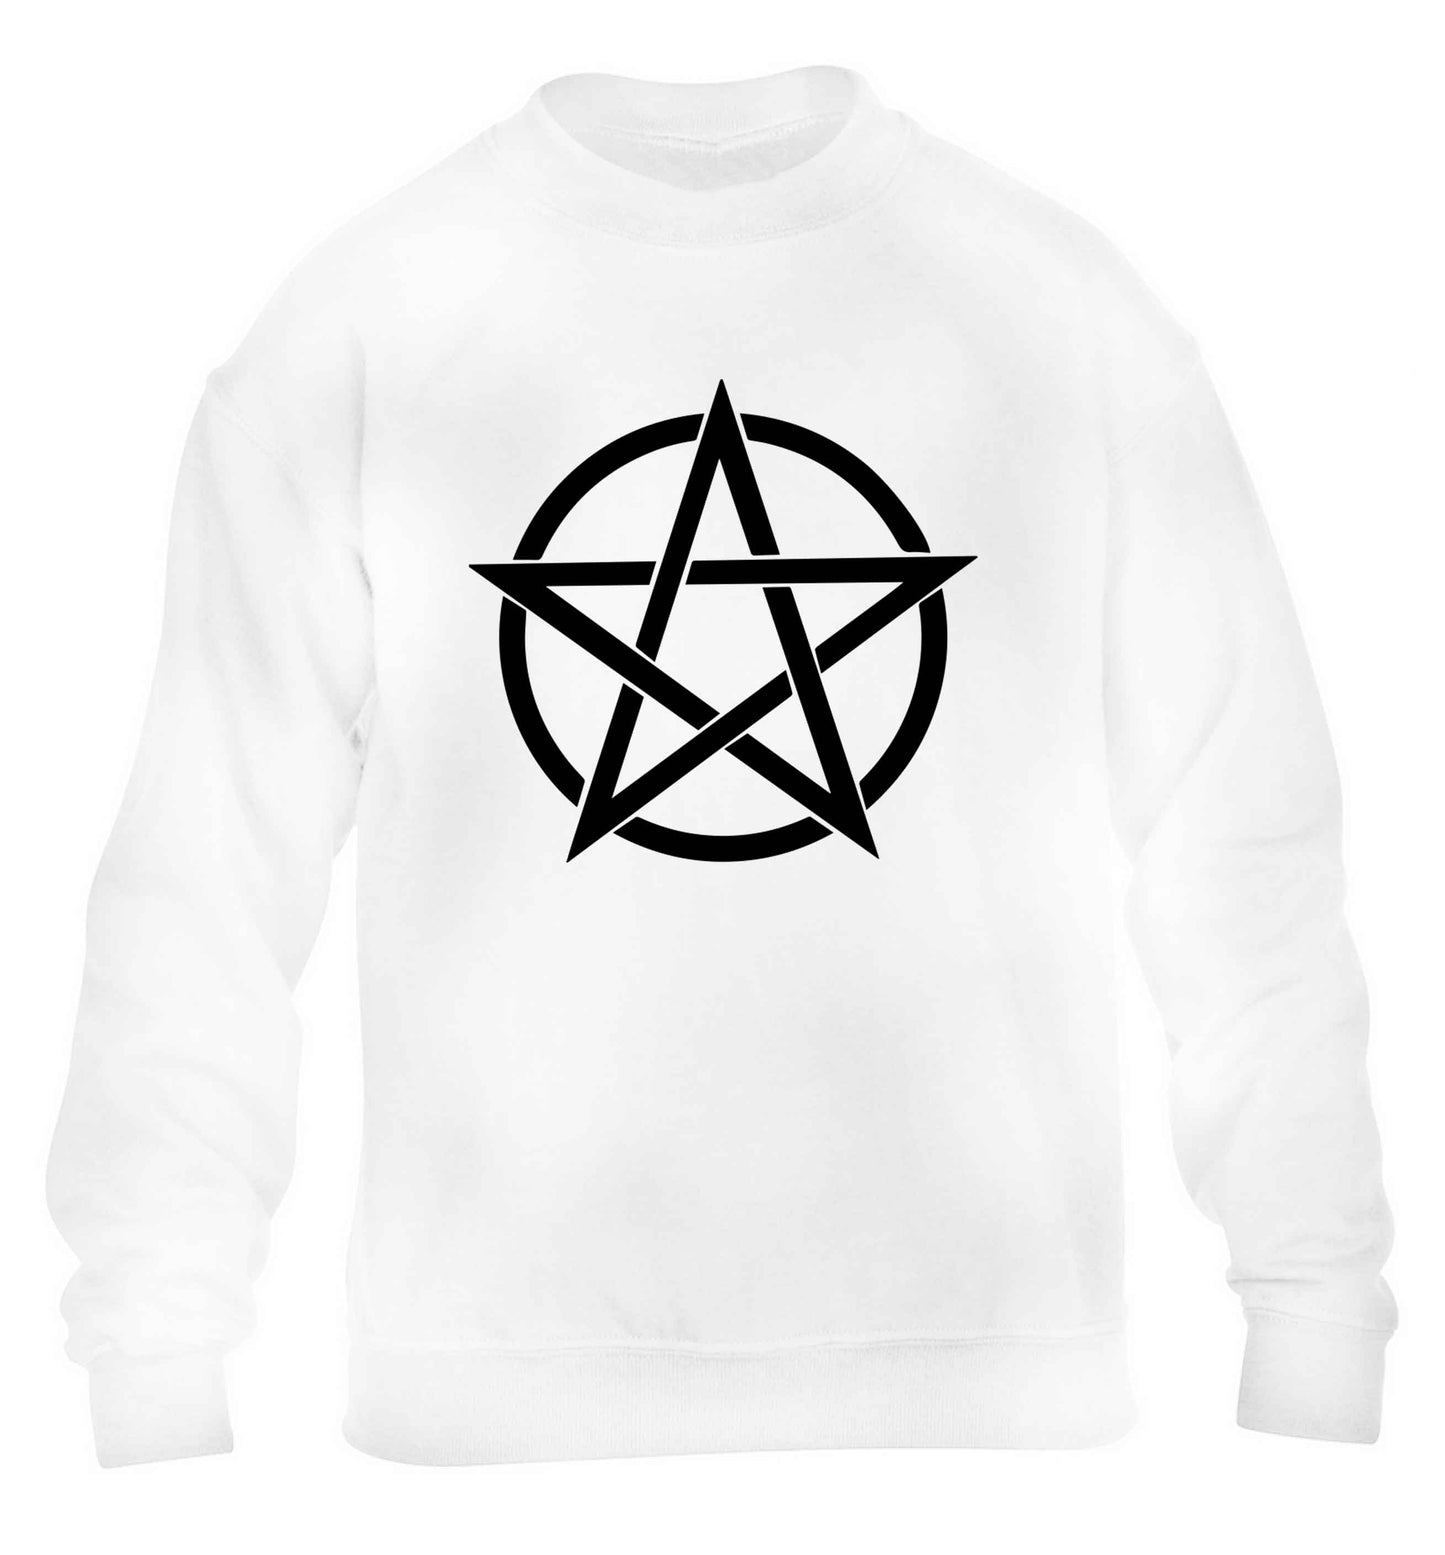 Pentagram symbol children's white sweater 12-13 Years